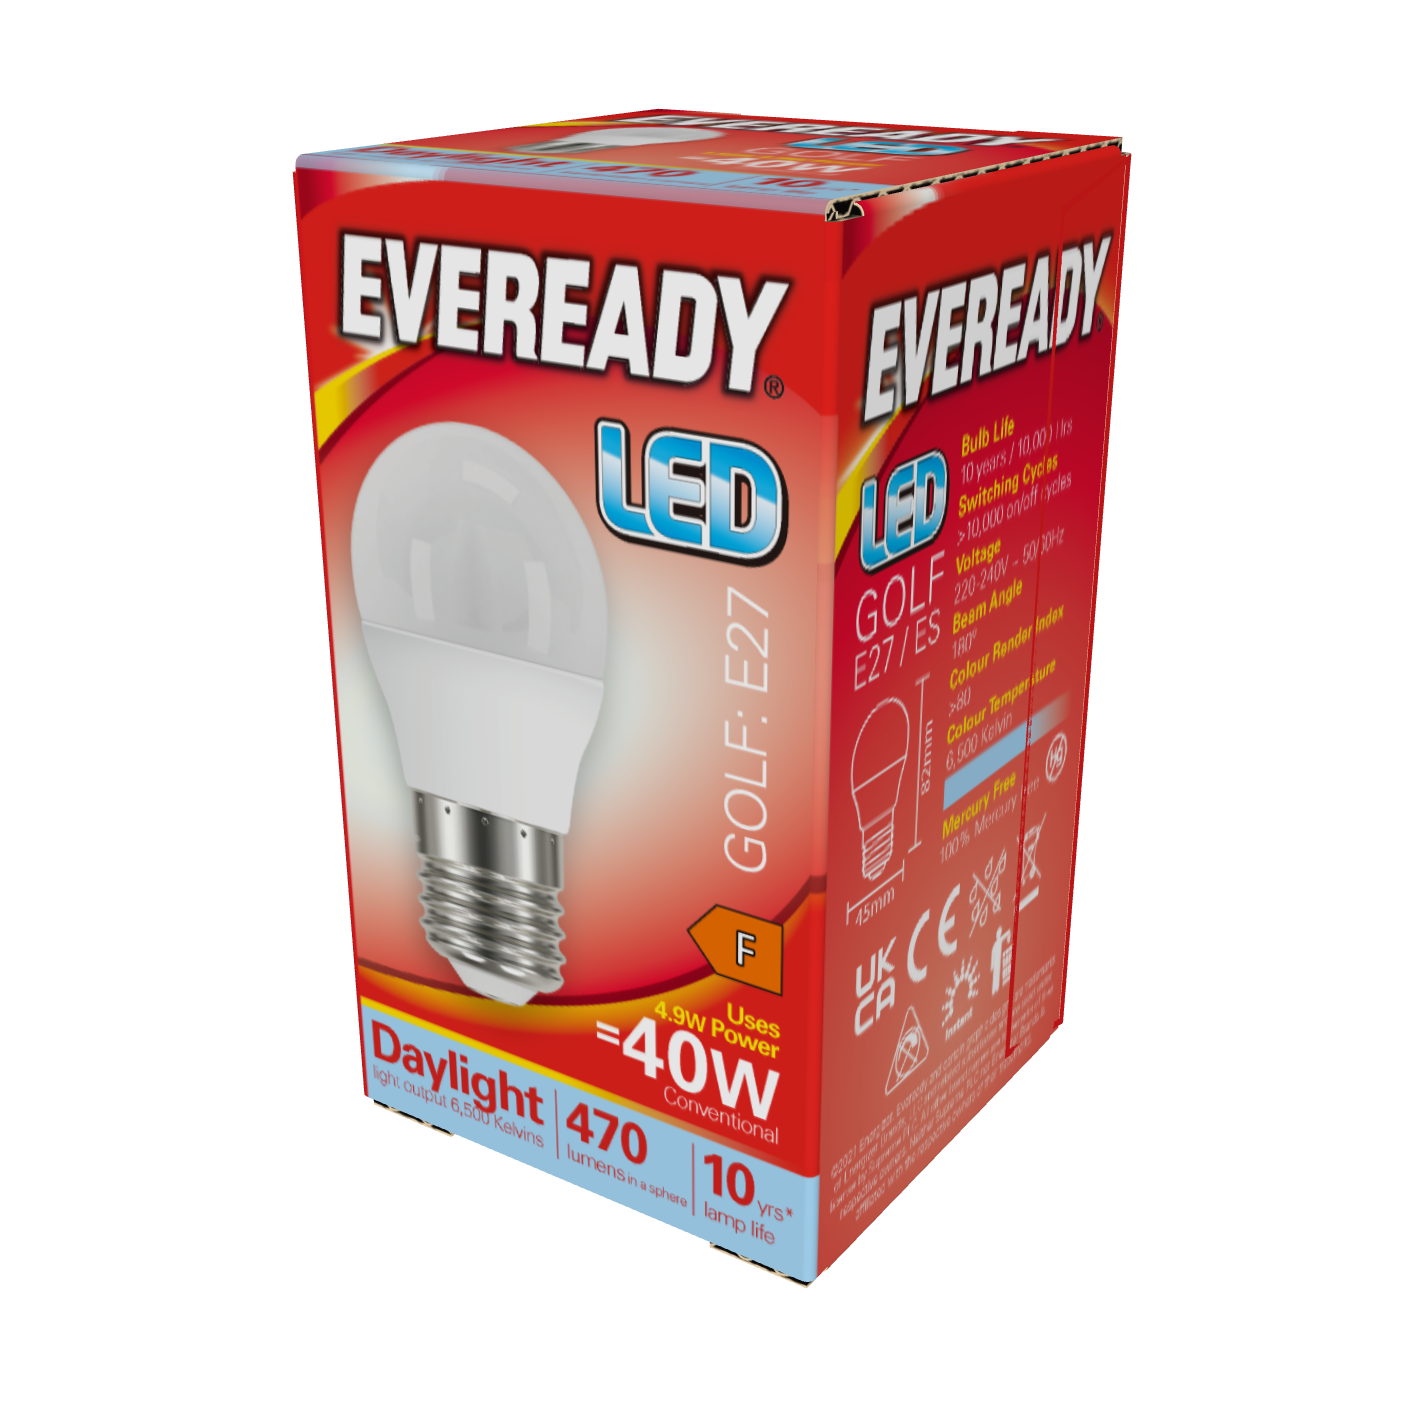 Eveready LED Golf E27 (ES) 470lm 4.9W 6,500K (Daylight), Box of 1